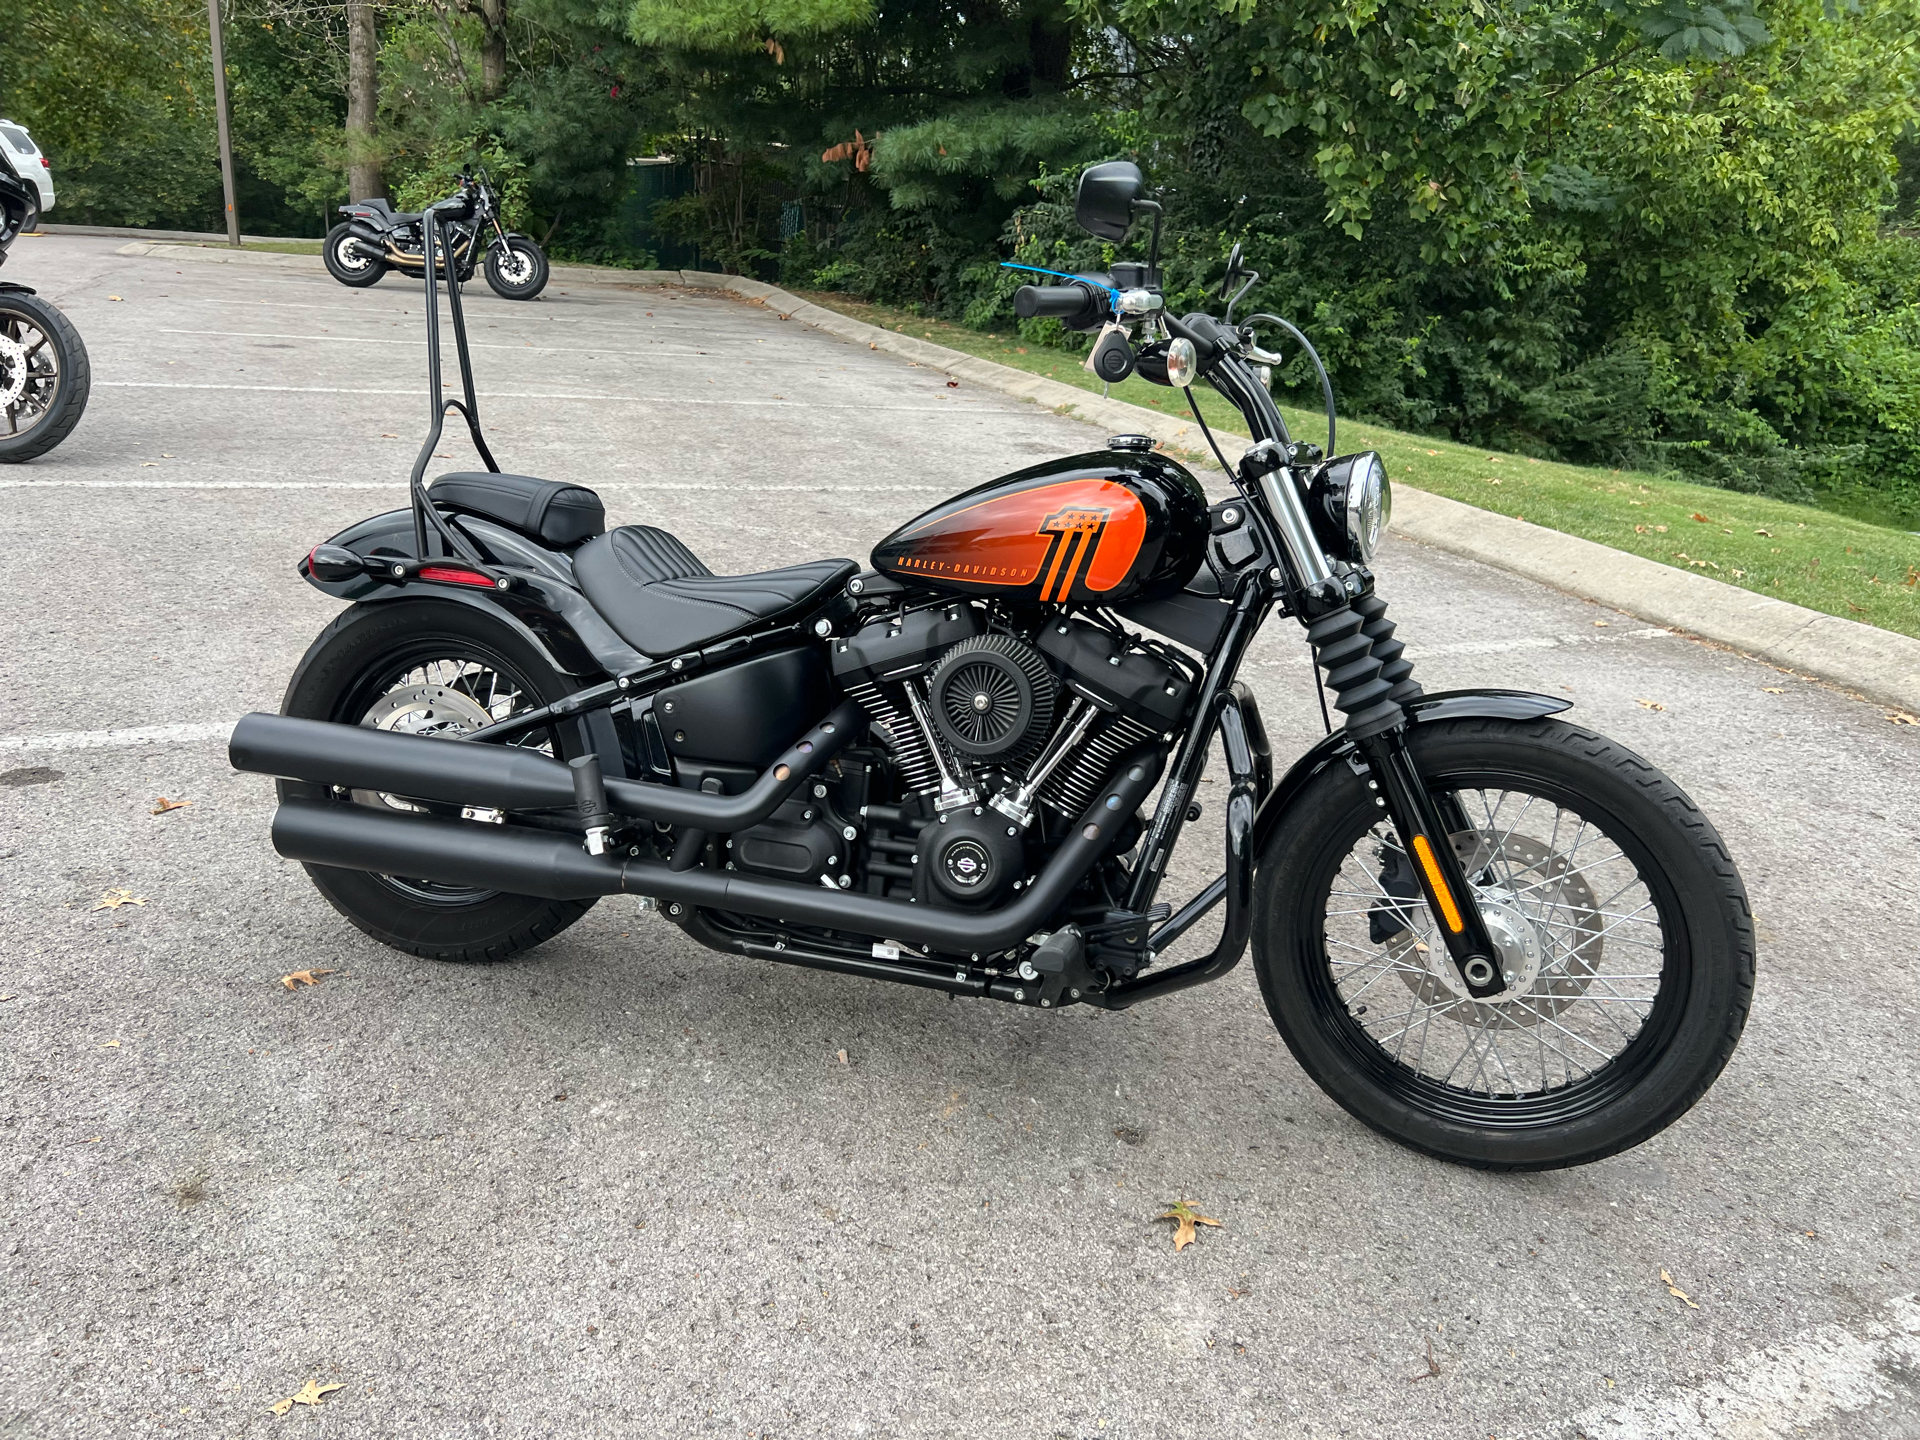 2021 Harley-Davidson Street Bob® 114 in Franklin, Tennessee - Photo 14